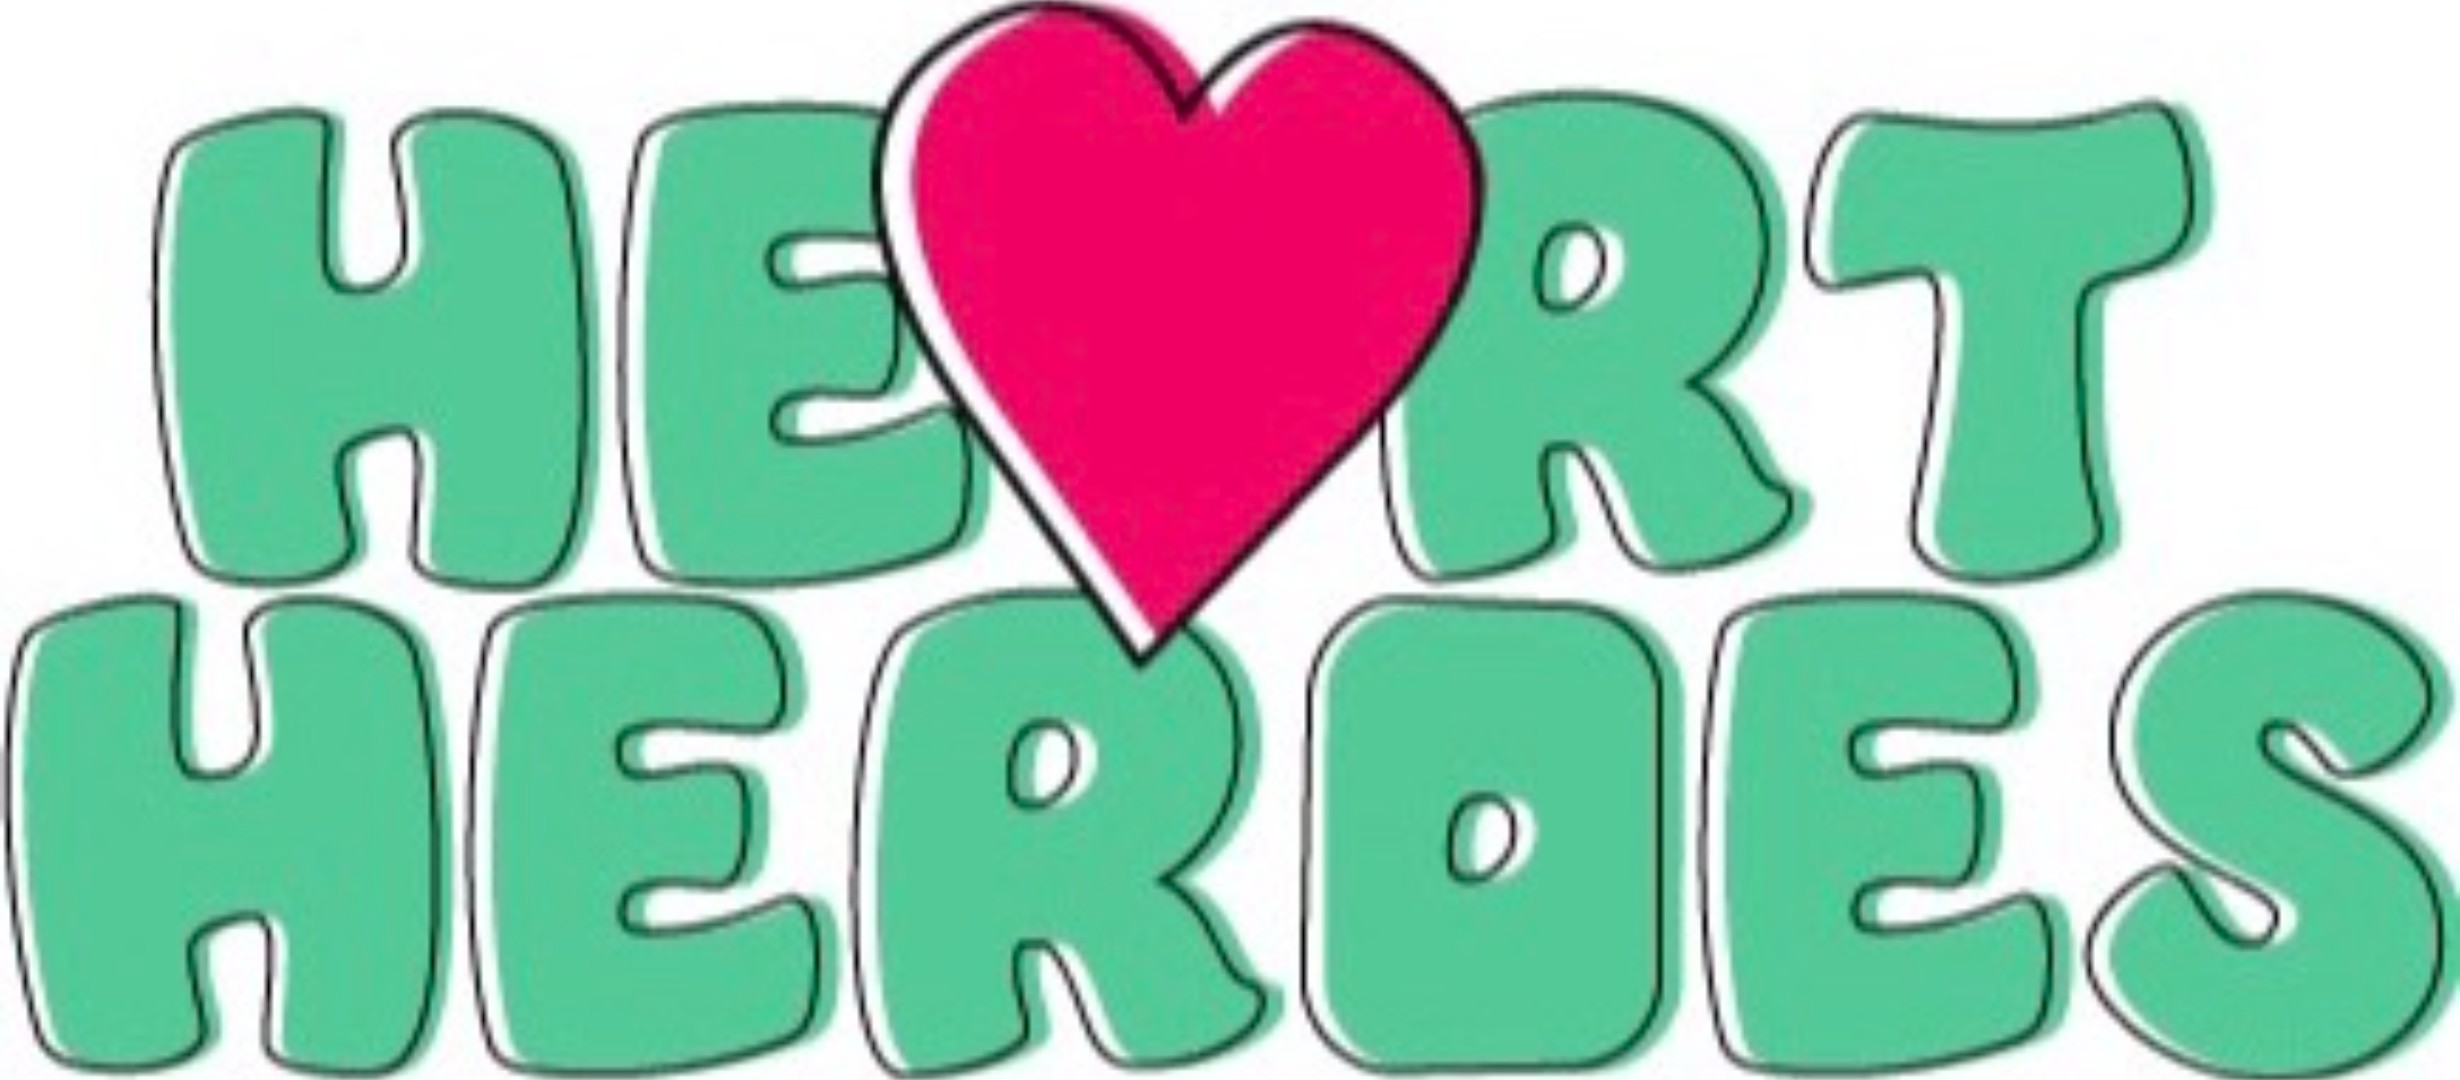 Heart Heroes logo